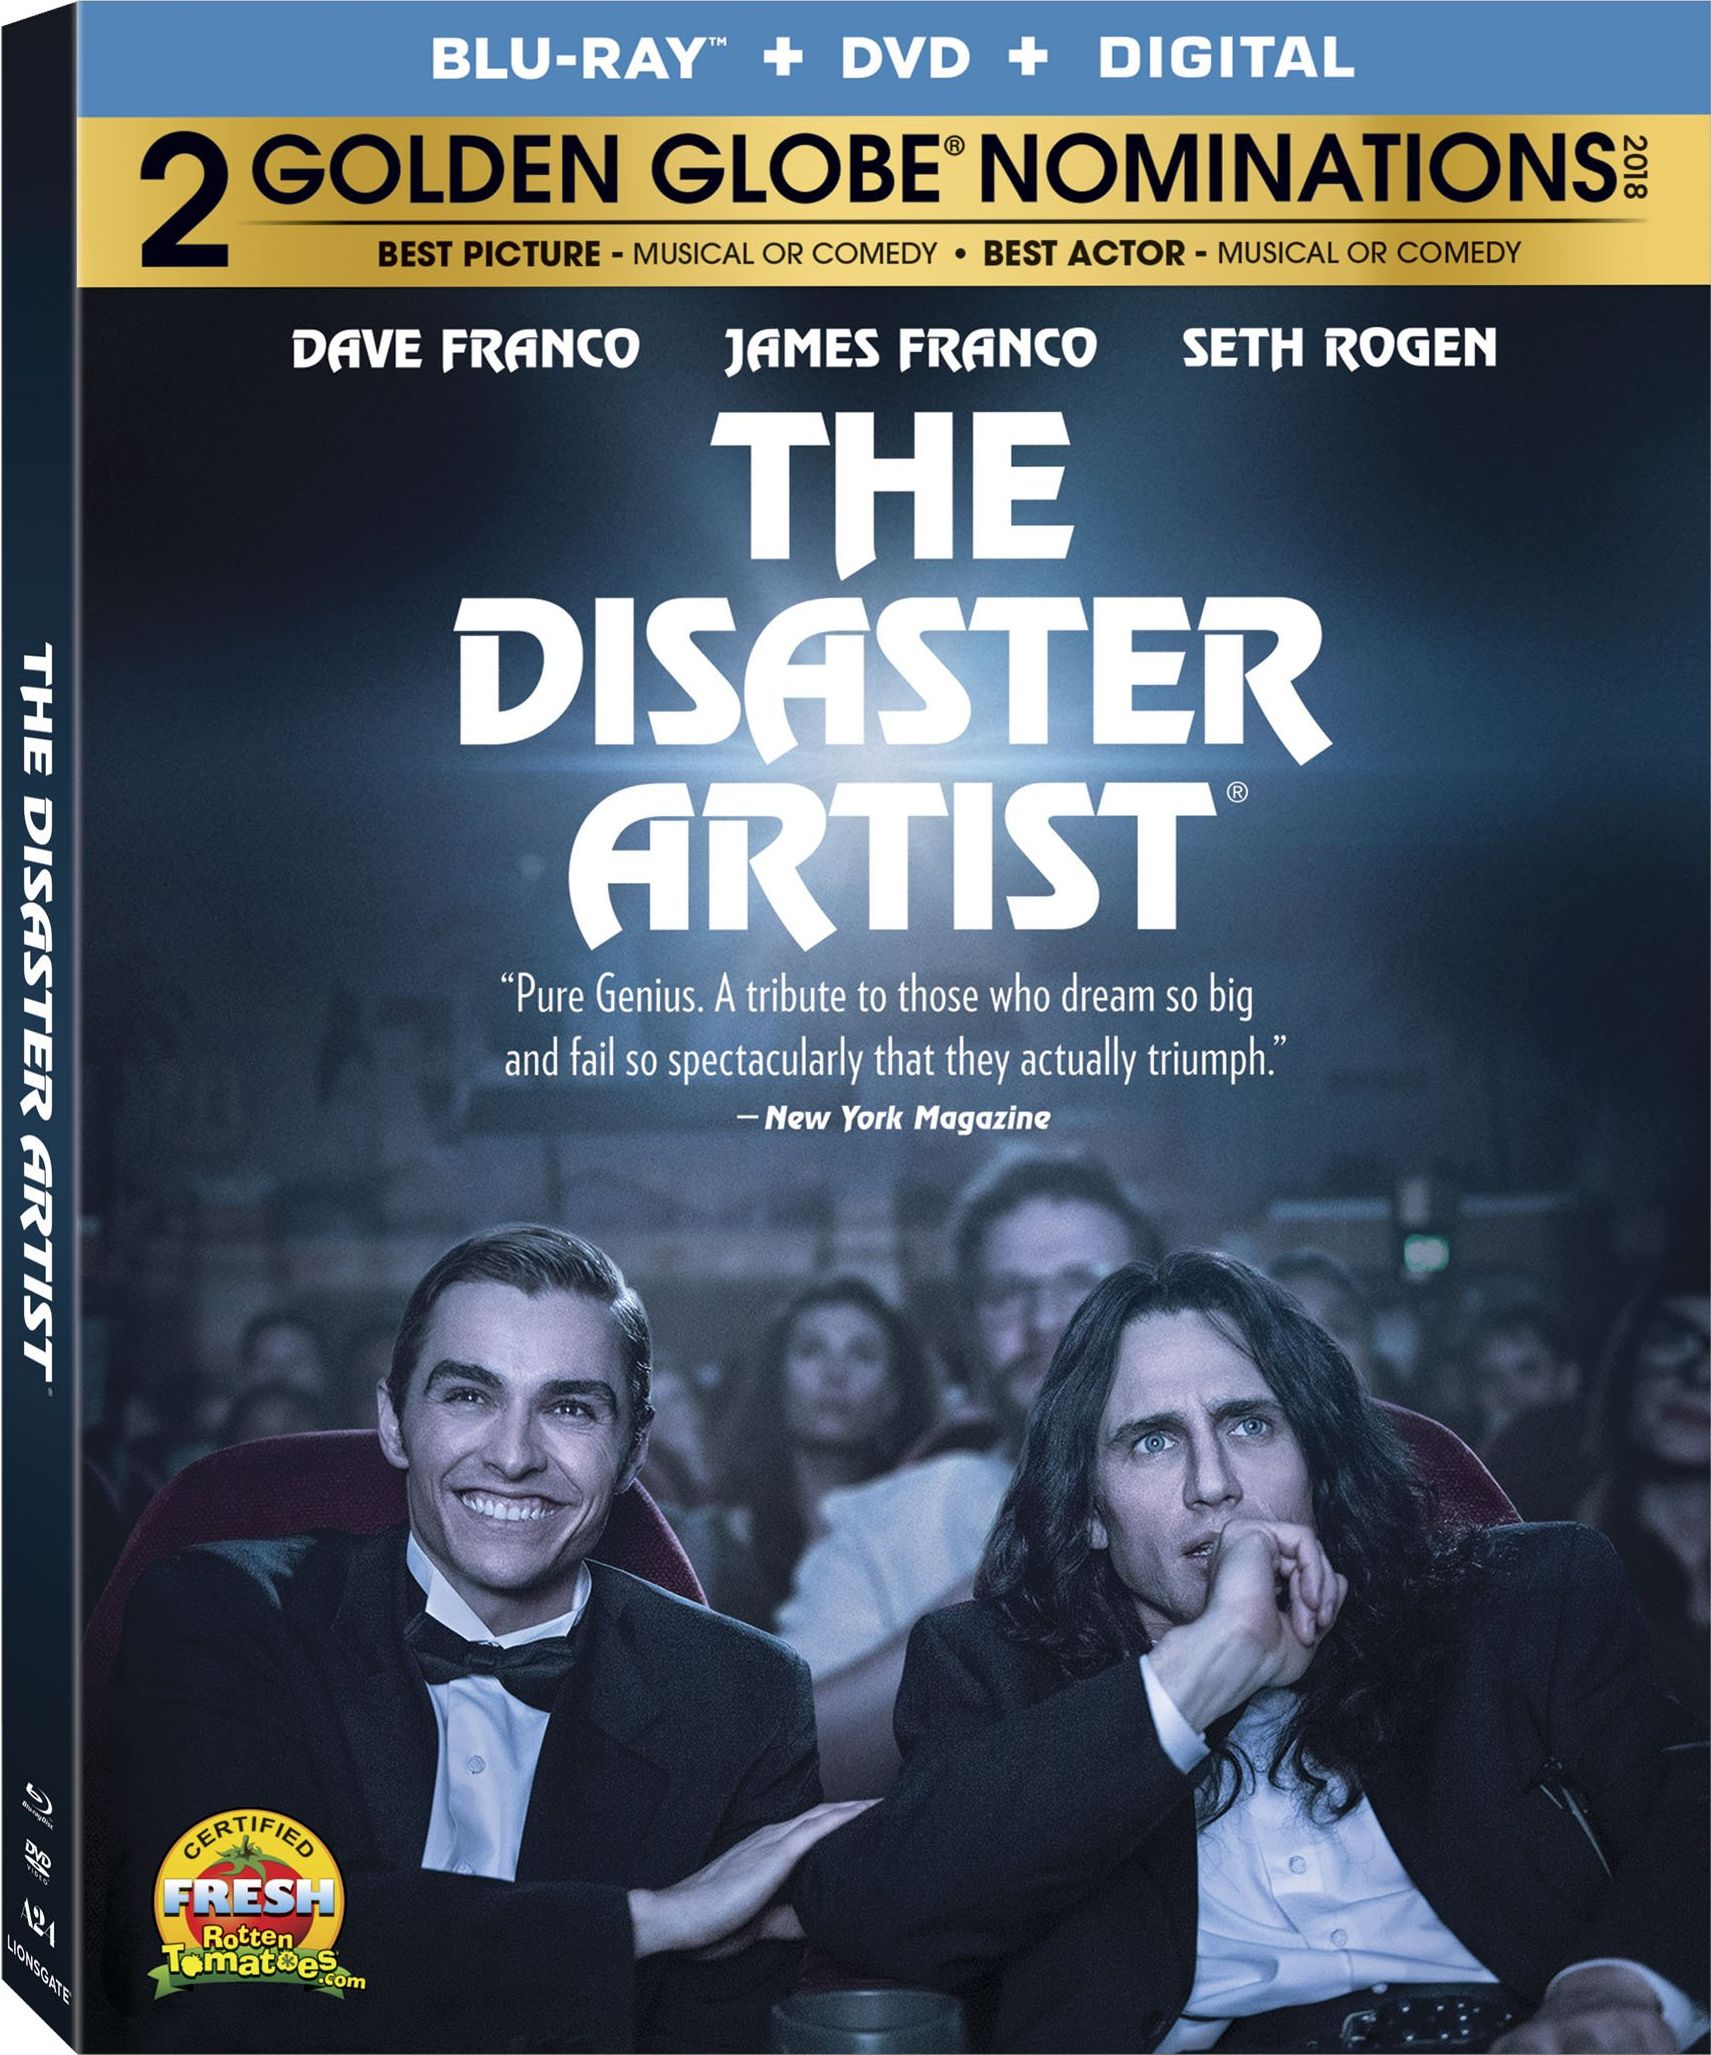 The Disaster Artist Audiobook Download